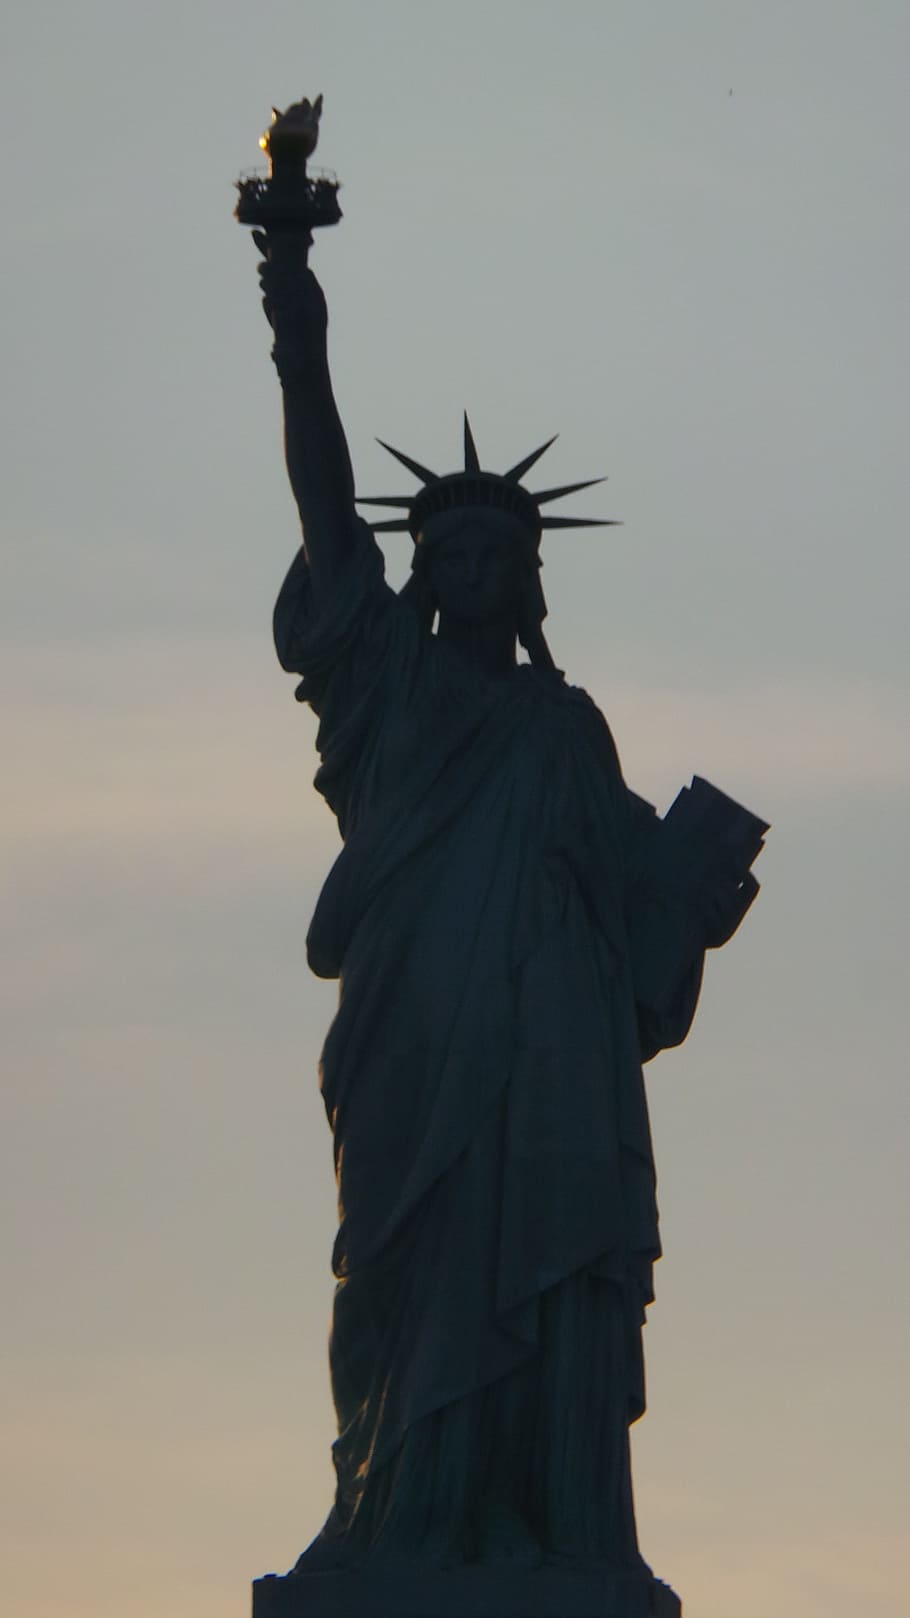 Patung Liberty, Liberty, New York, Siluet, patung, monumen, Tempat terkenal, Pulau liberty, Kota New York, langit